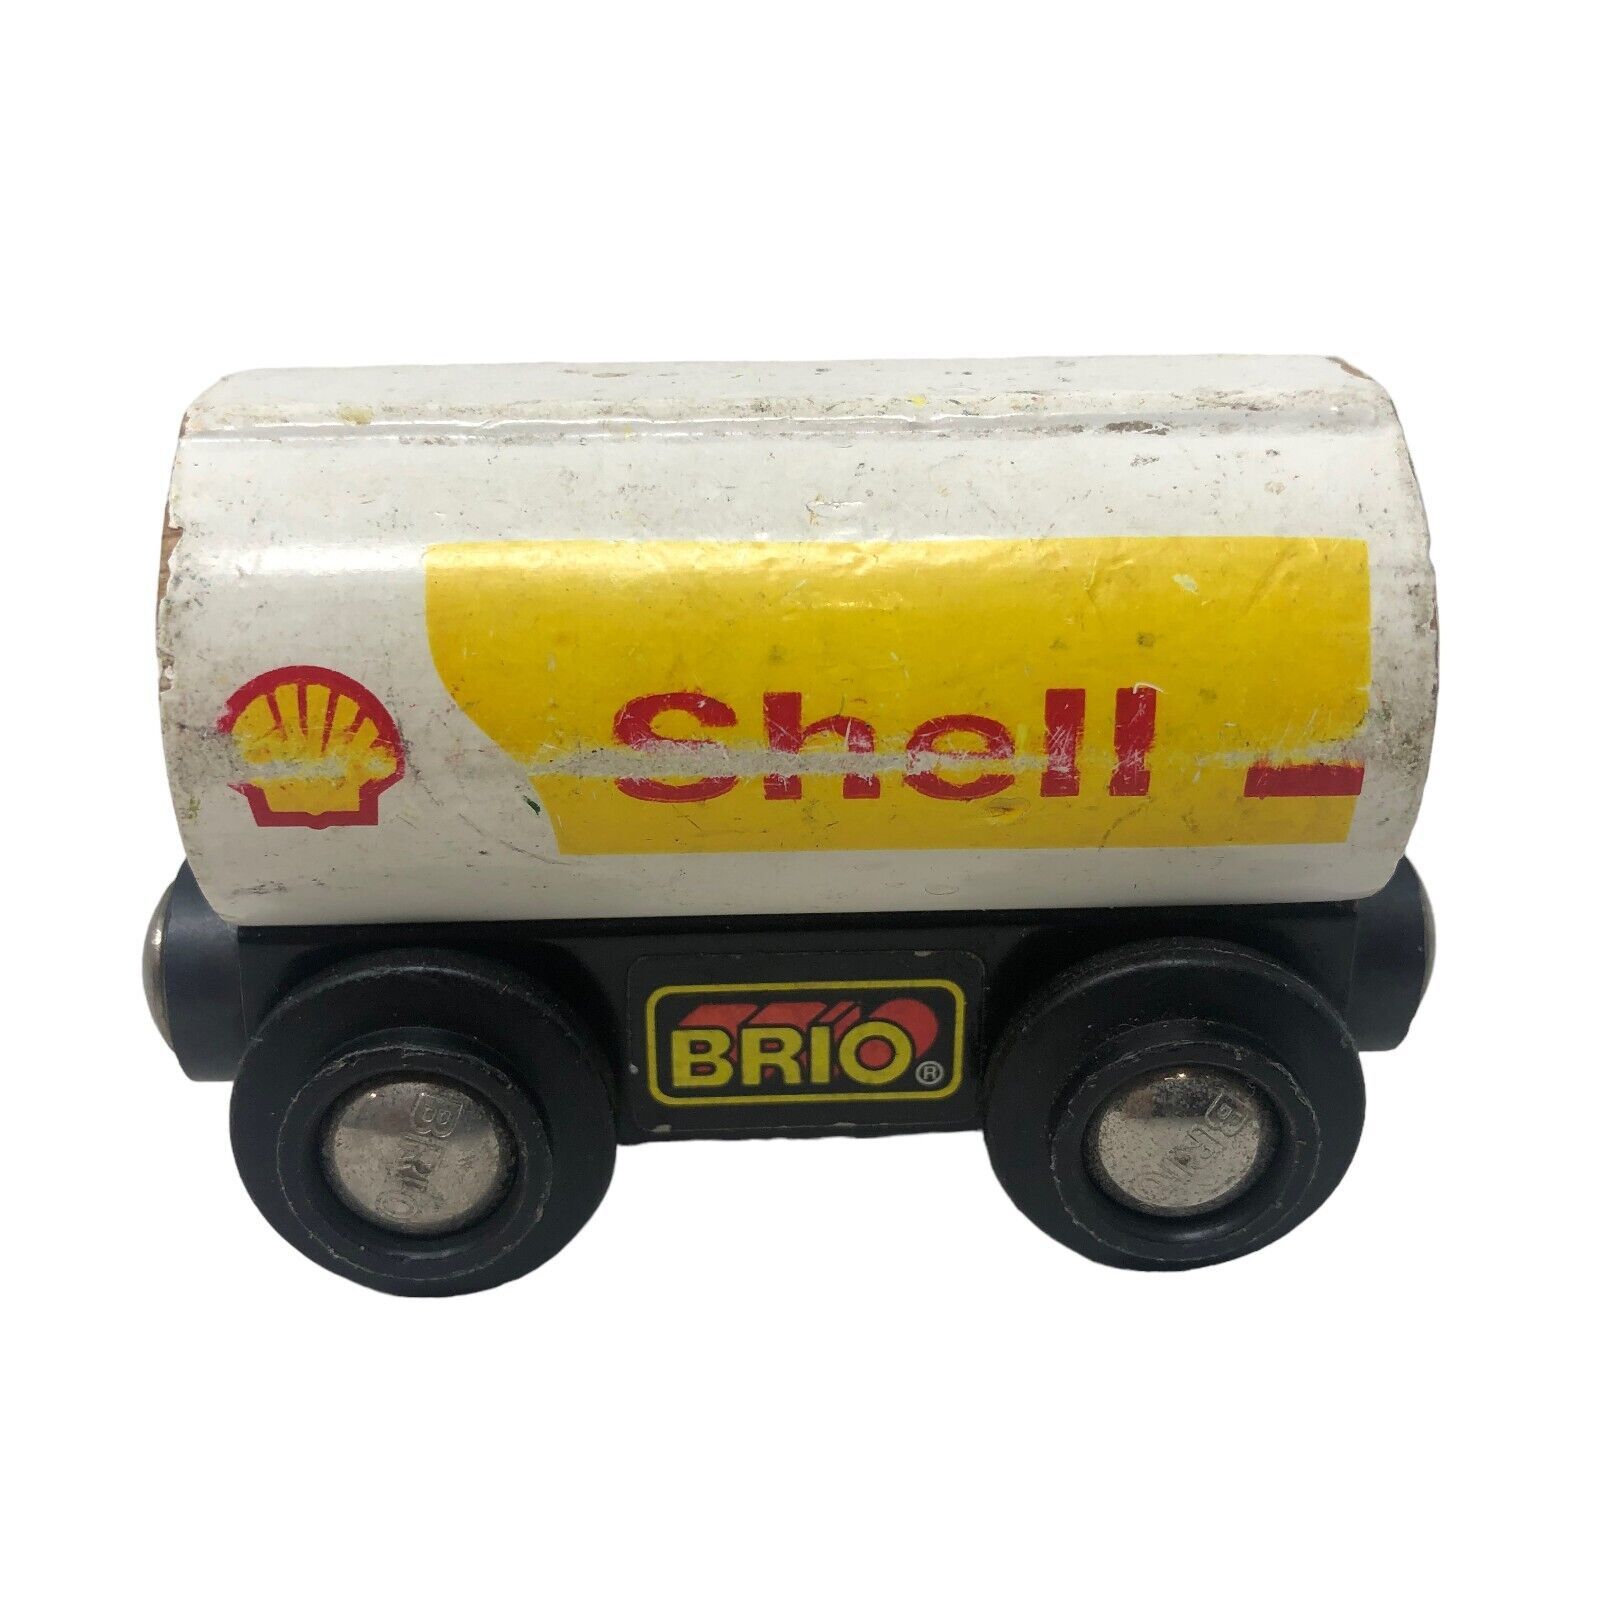 Primary image for Brio Wooden Railway Train Engine Fuel Wagon Shell Gas Car